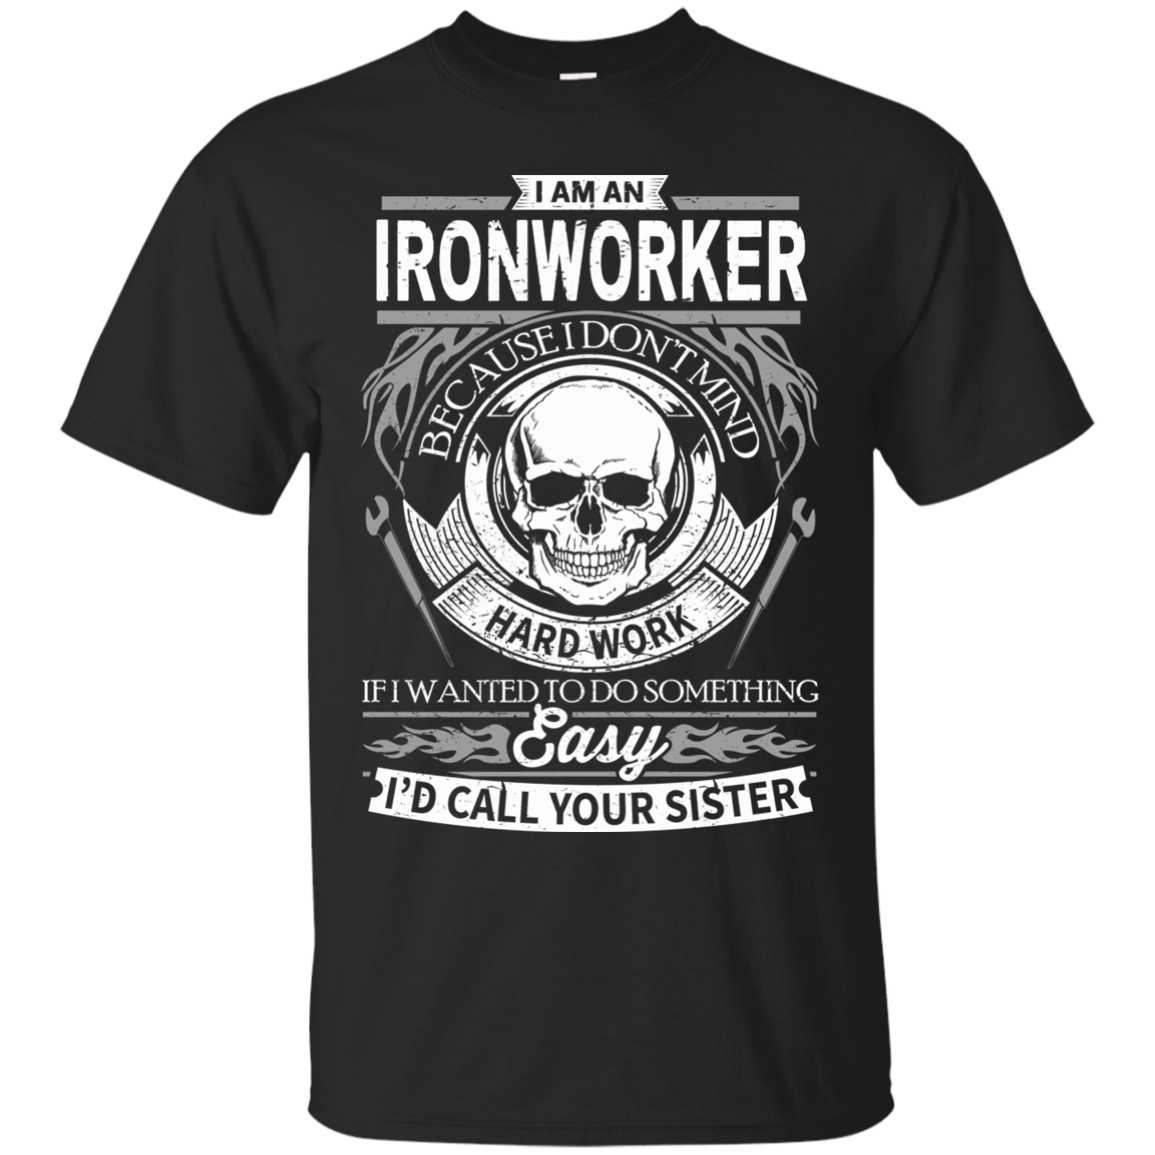 ironworker-shirts-i-am-a-ironworker-because-i-don-t-mind-hard-work-teesmiley